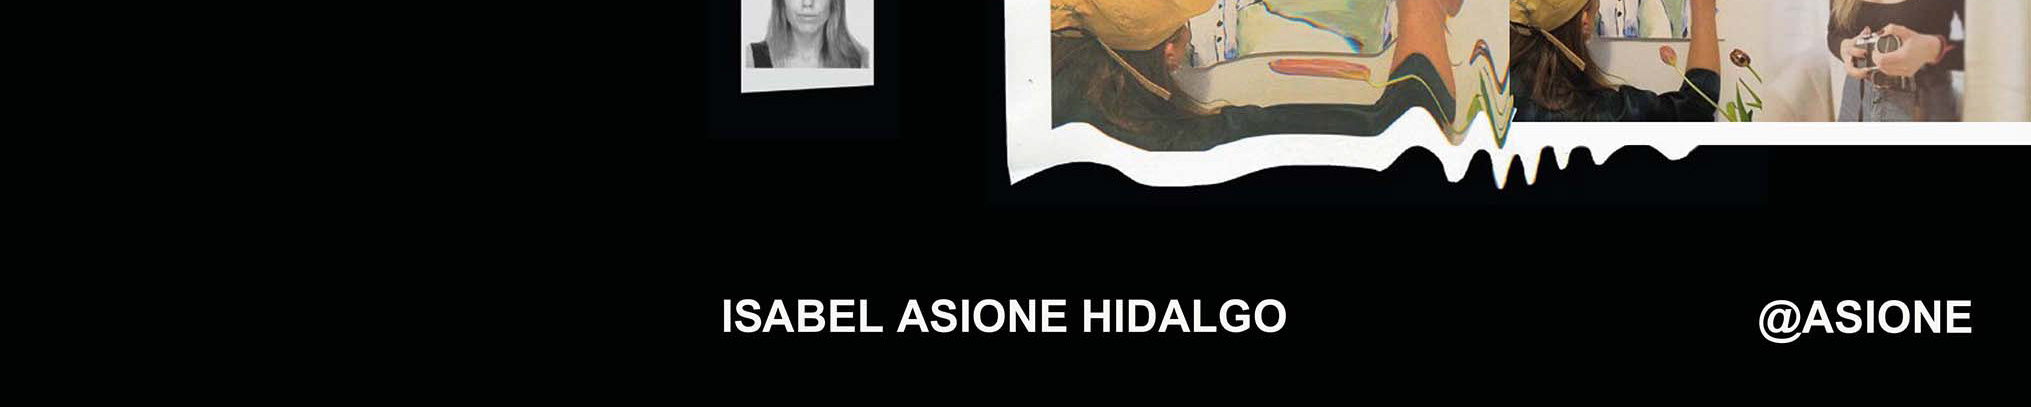 Isabel asione Hidalgo's profile banner